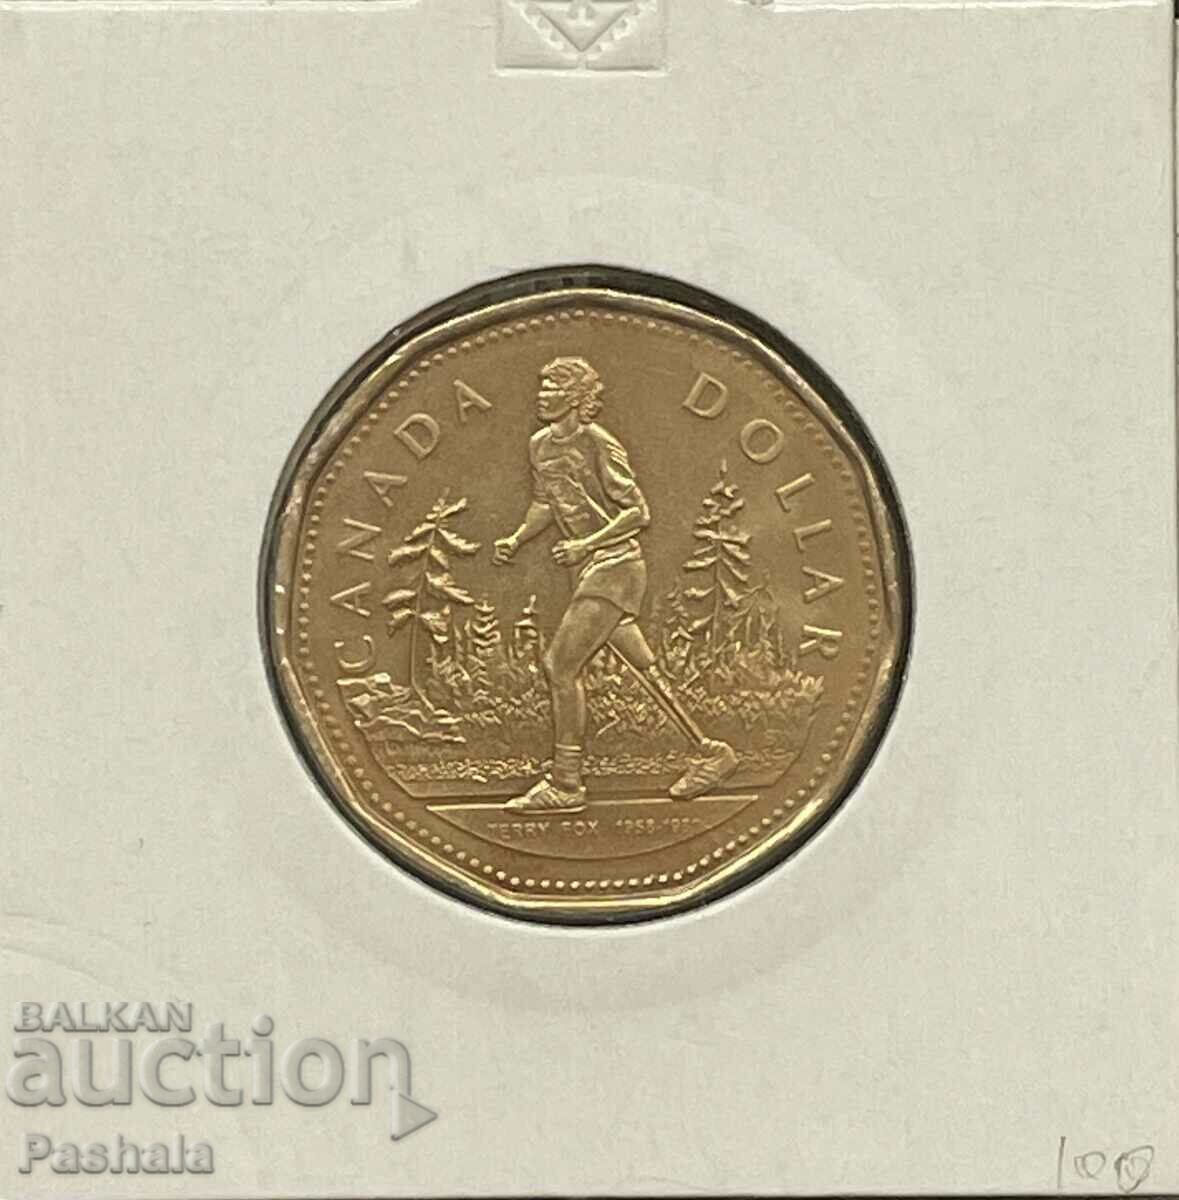 Canada 1 USD 2005